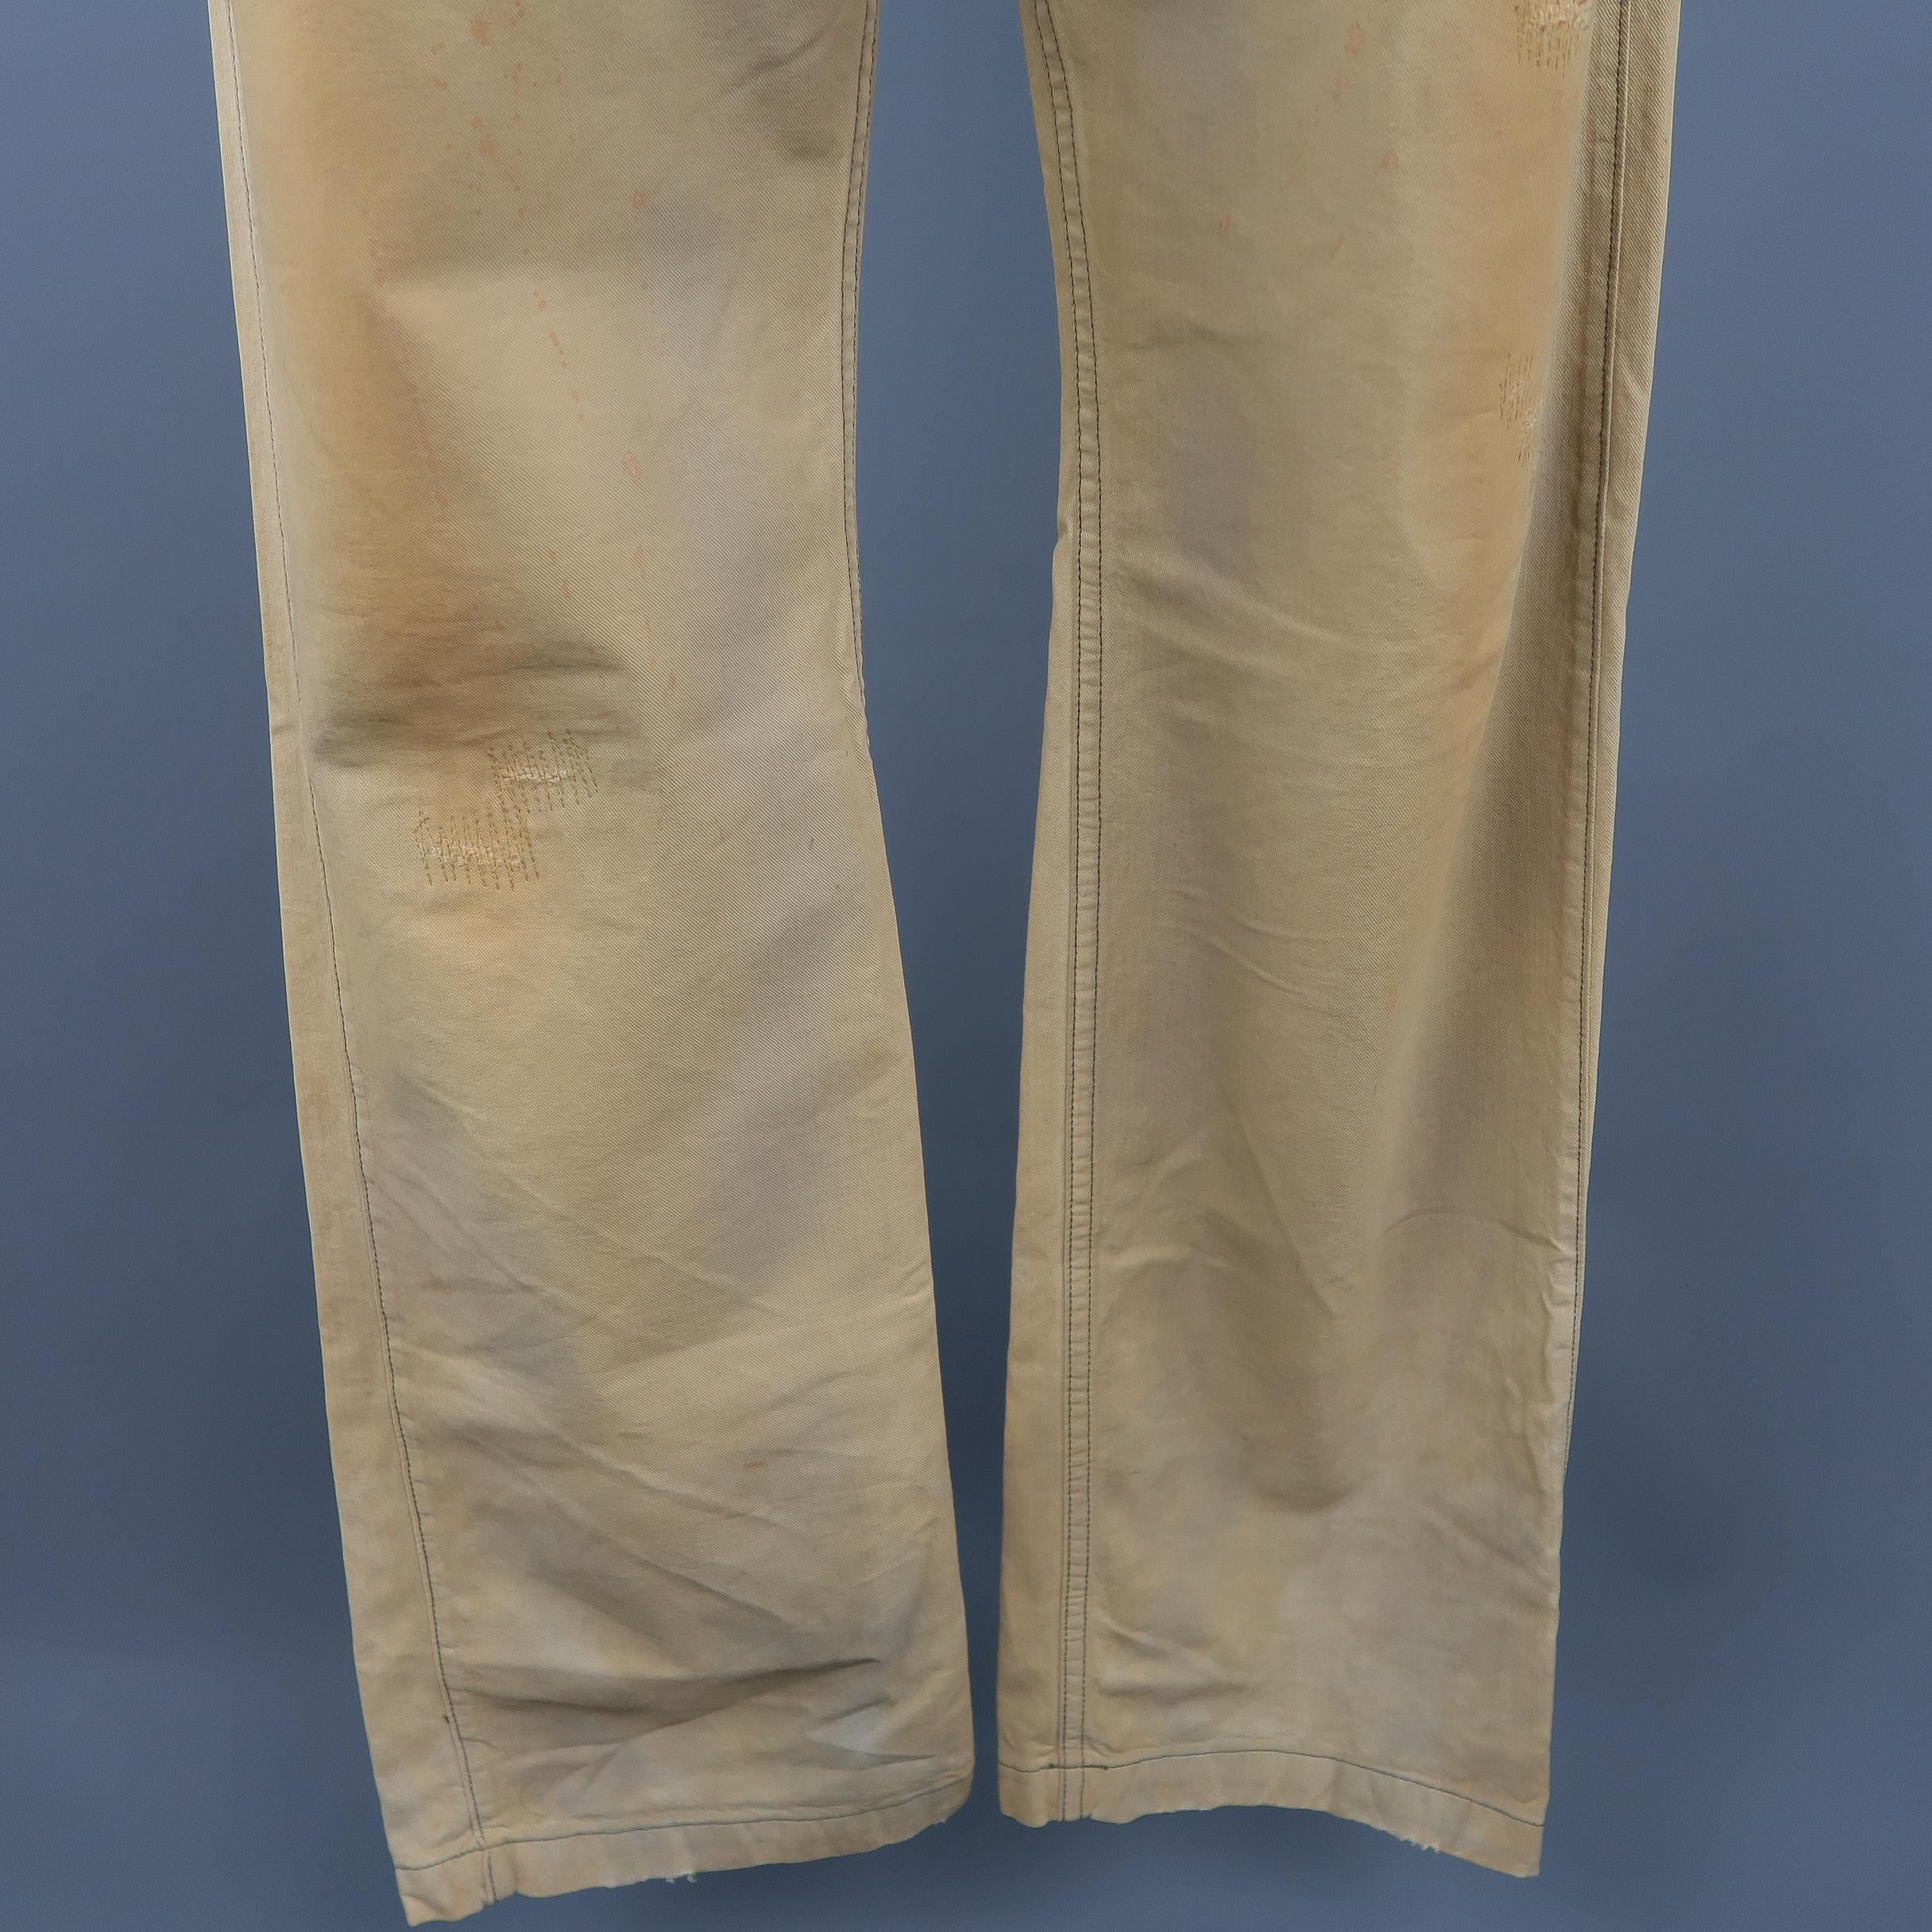 distressed khaki pants